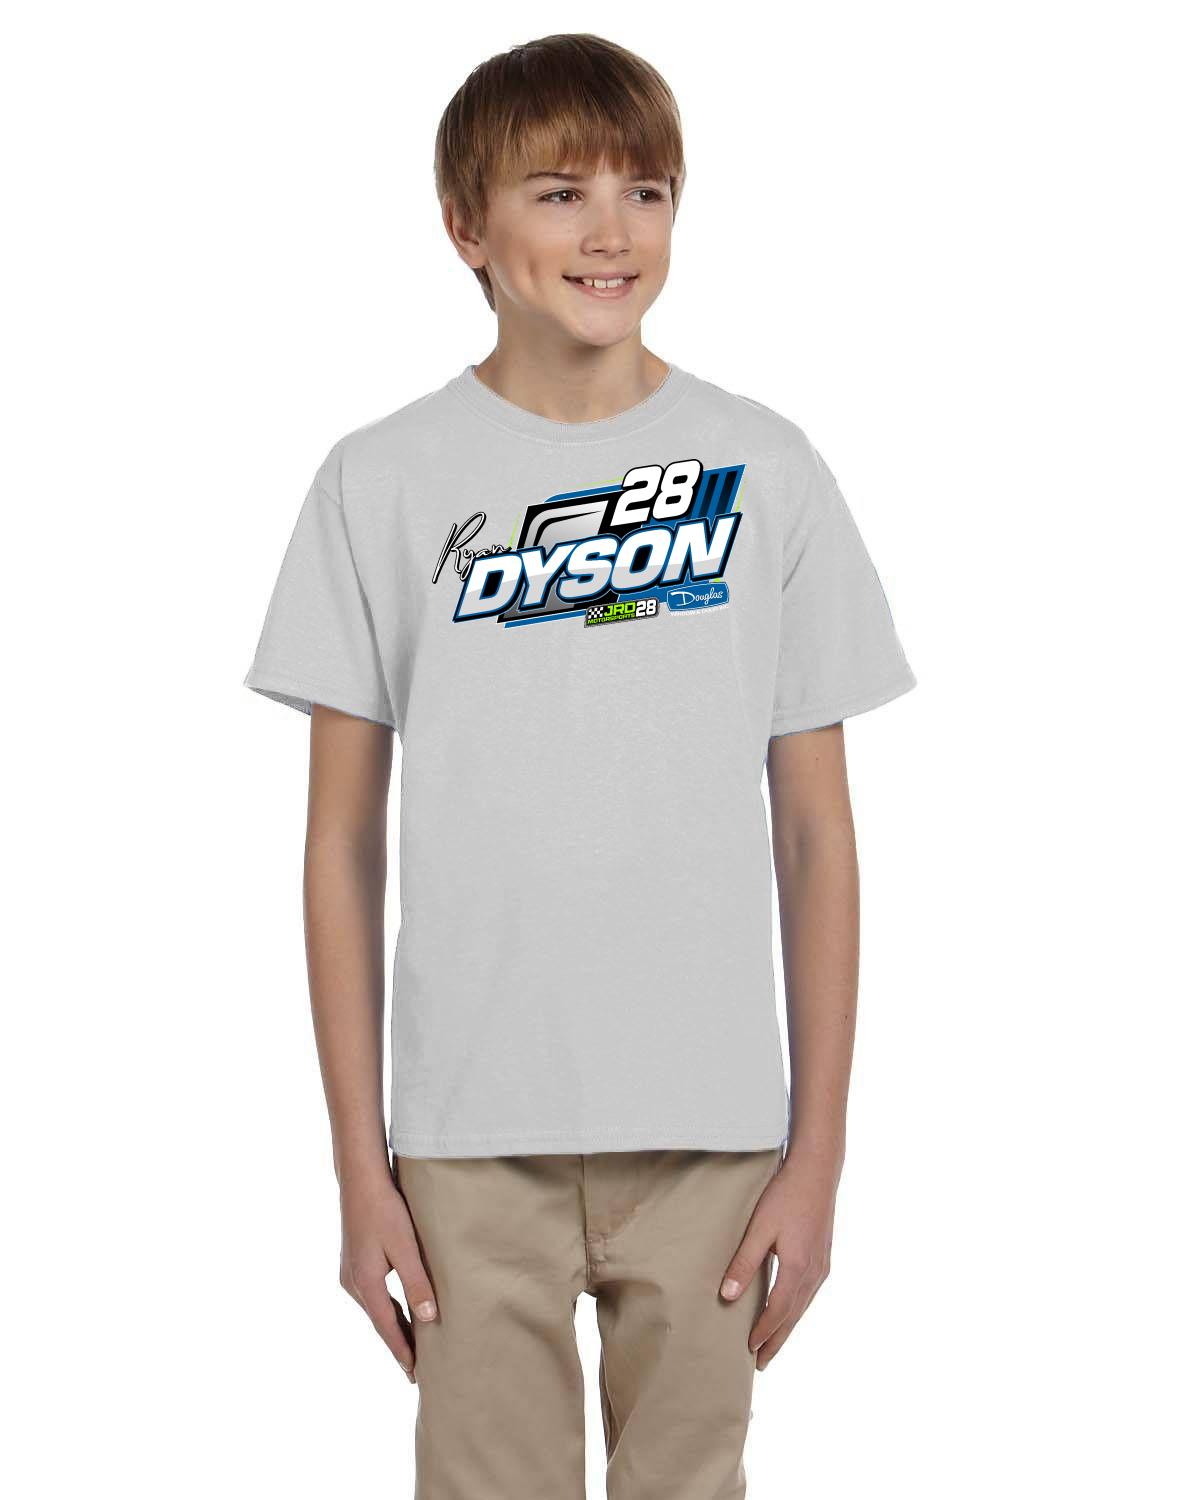 Ryan Dyson JRD Racing 2023 Youth tshirt